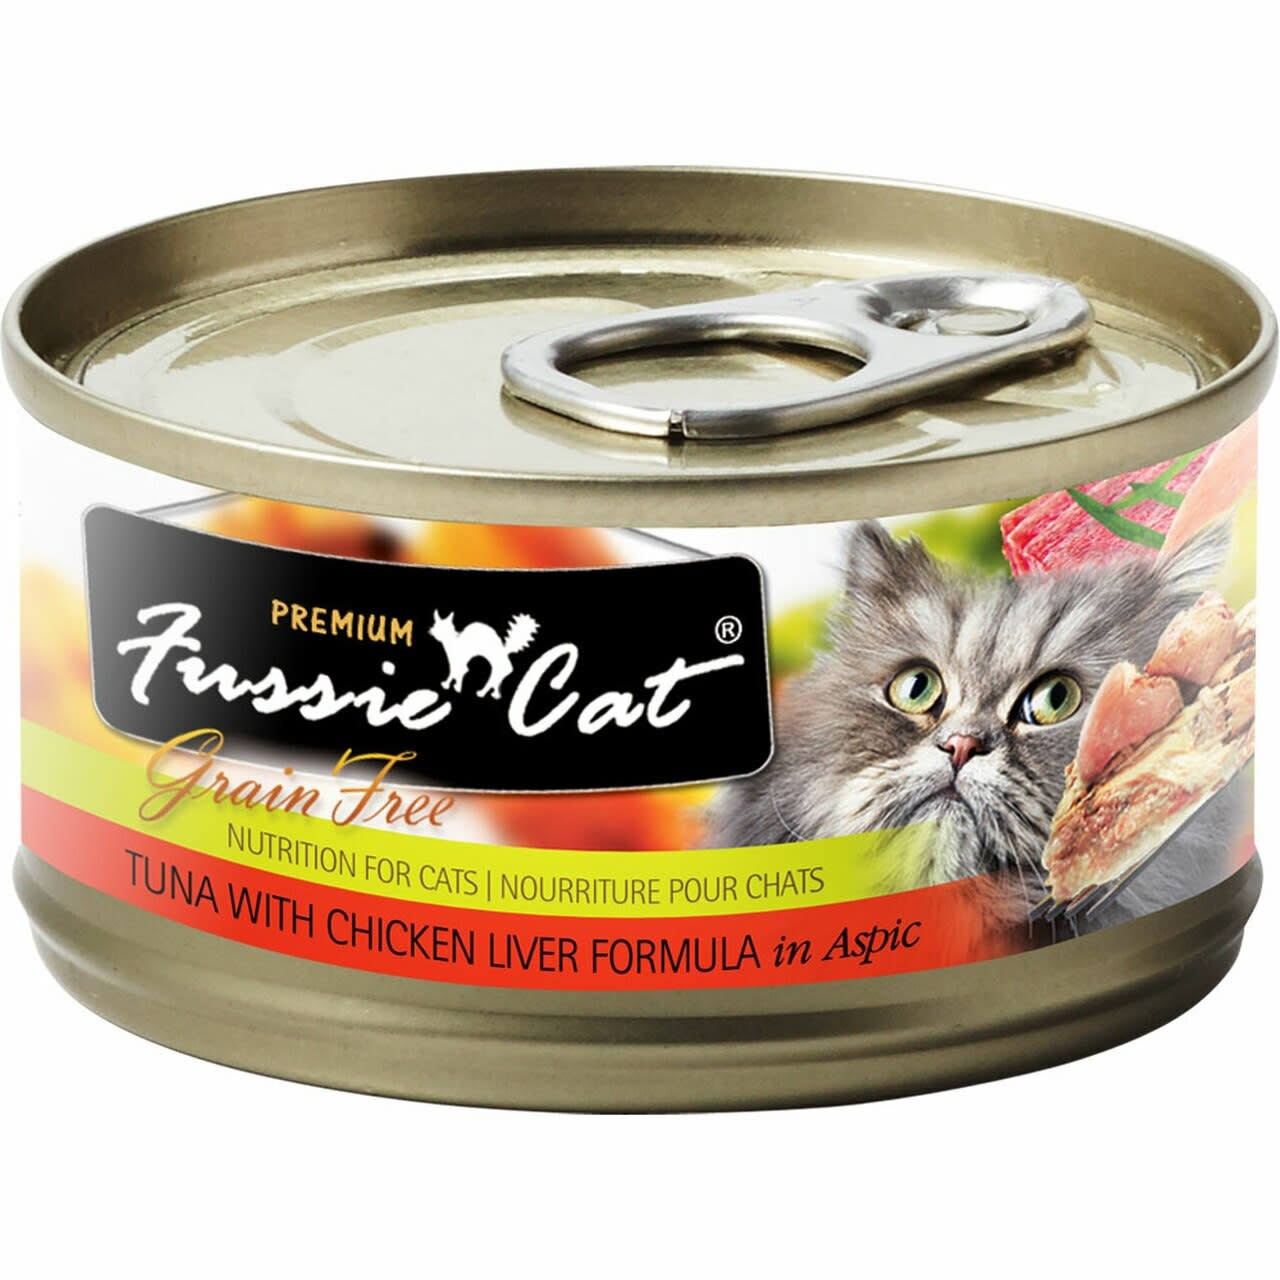 Fussie Cat Premium Tuna with Chicken Liver Formula in Aspic 2.82 oz